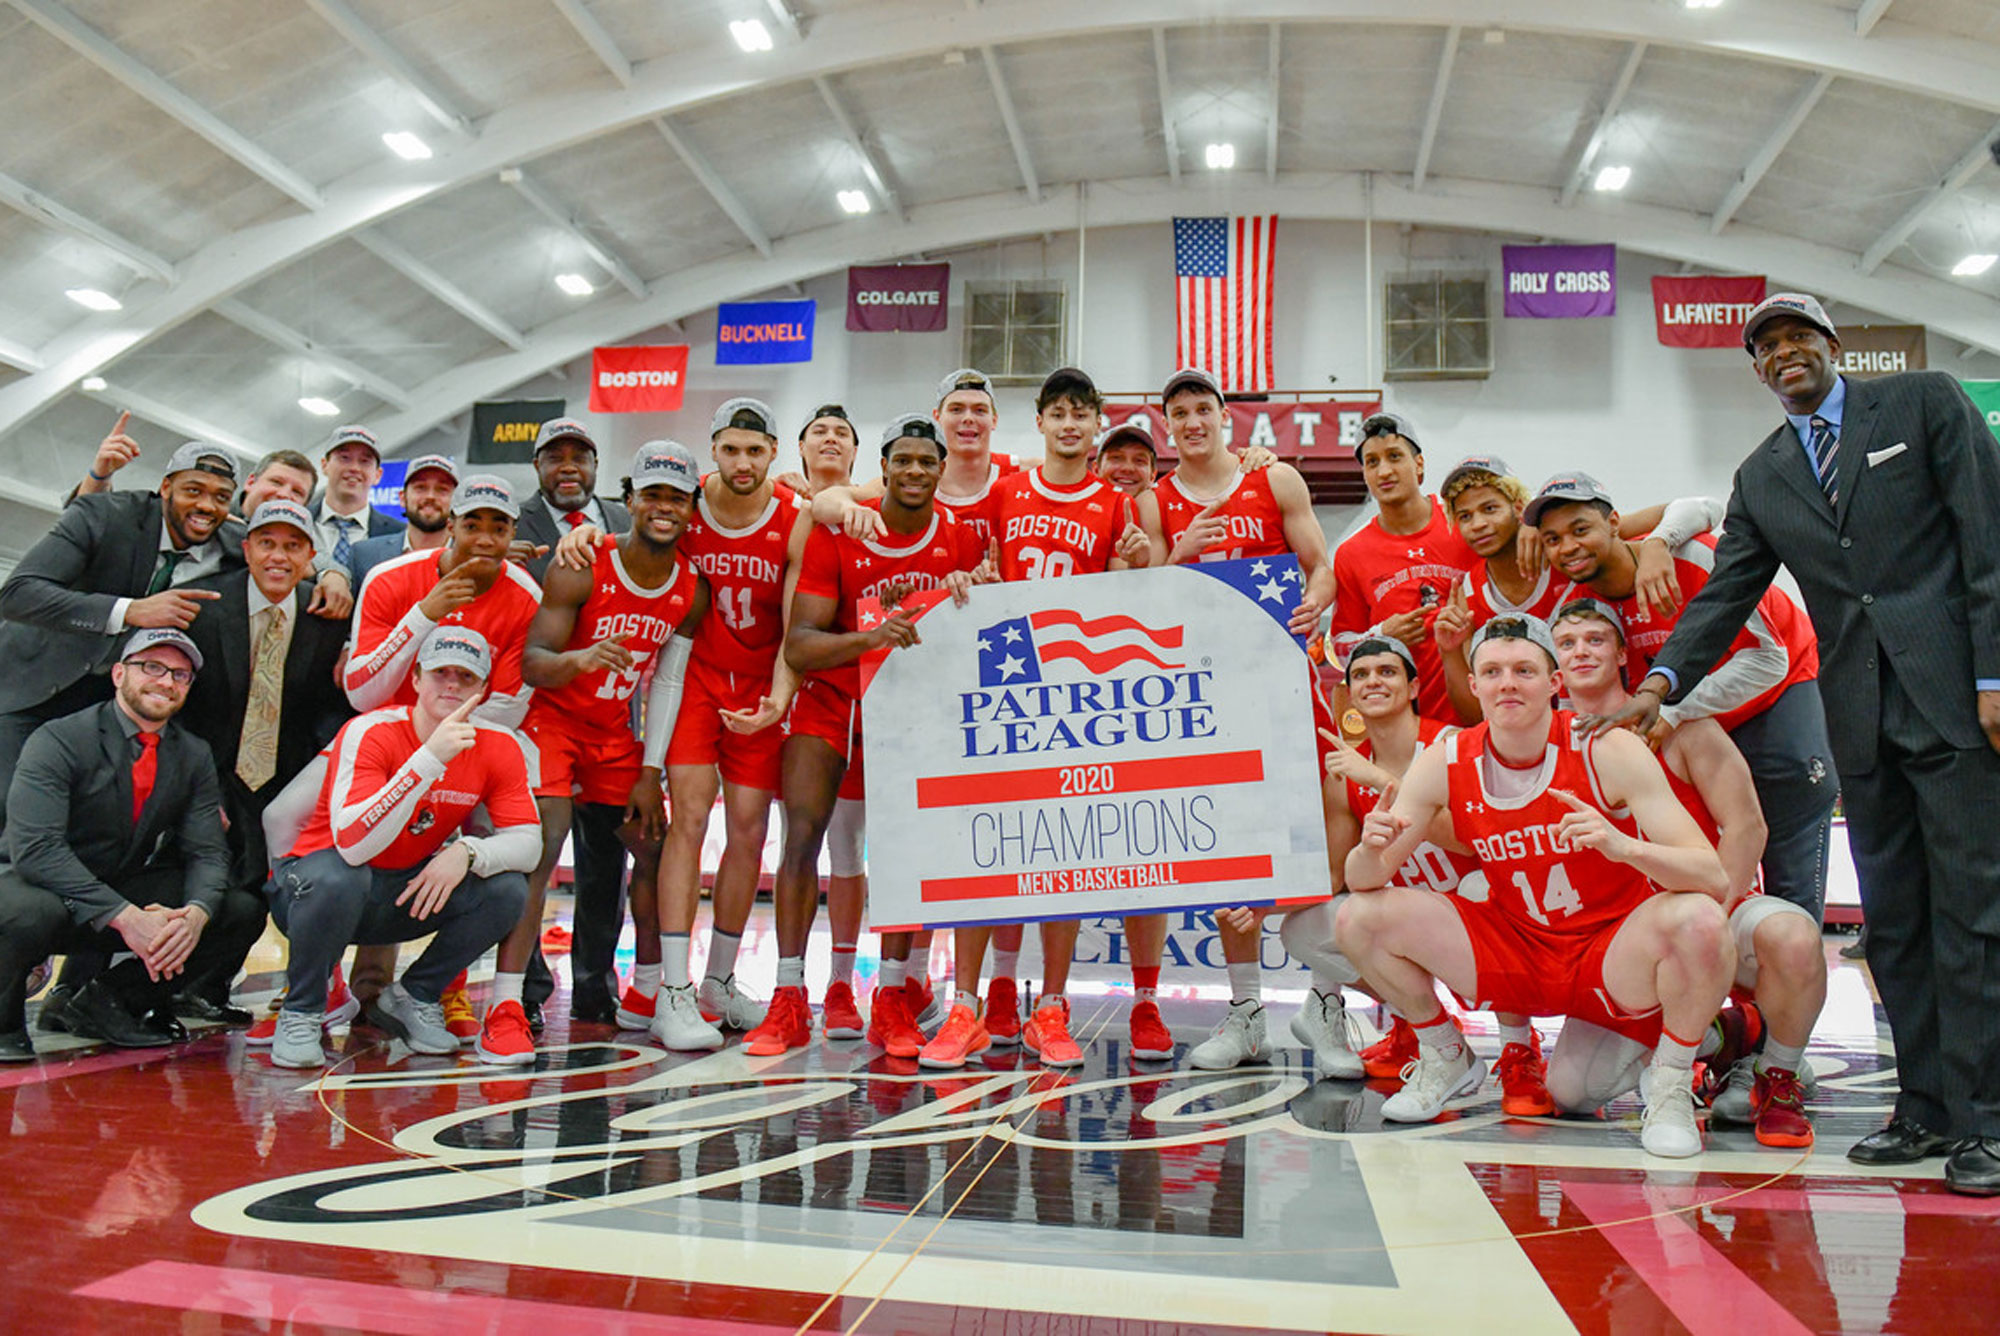 The BU men's basketball team celebrates their Patriot League championship